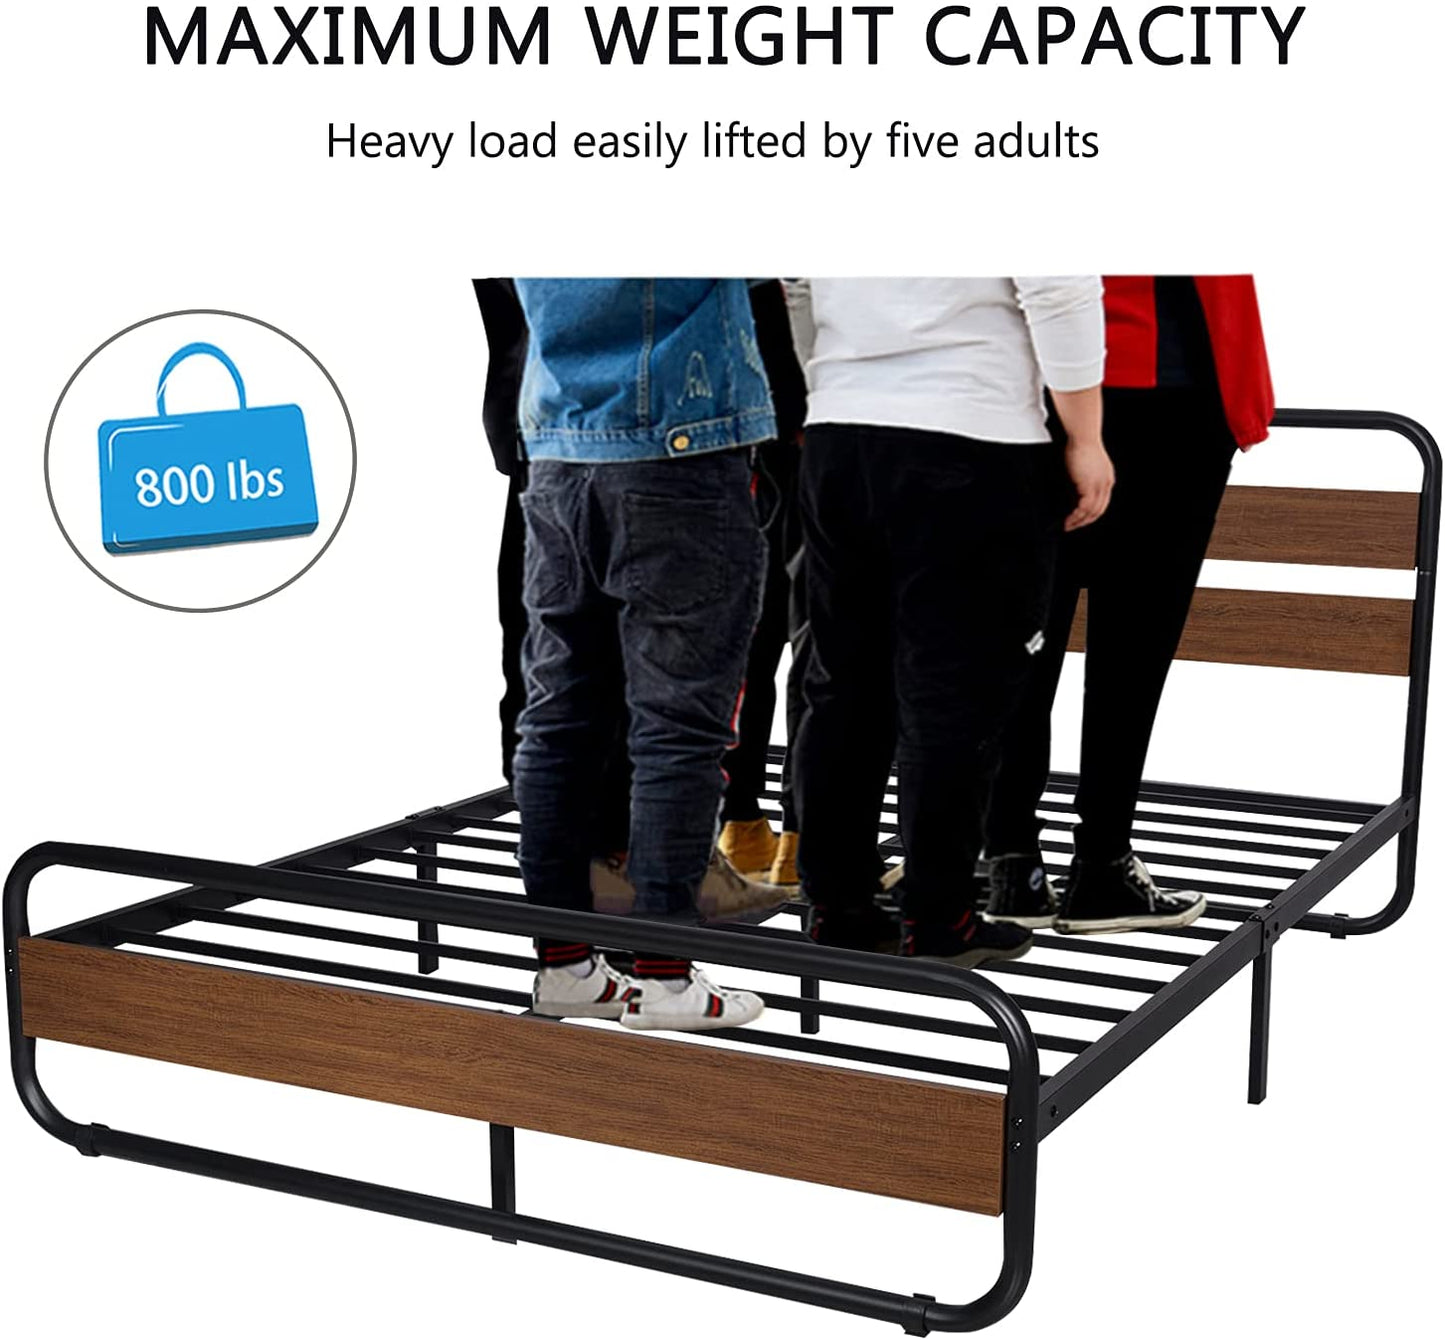 Allewie Metal Bed Frame with Wooden Headboard & Footboard, Heavy Duty Platform Frame with Under-Bed Storage